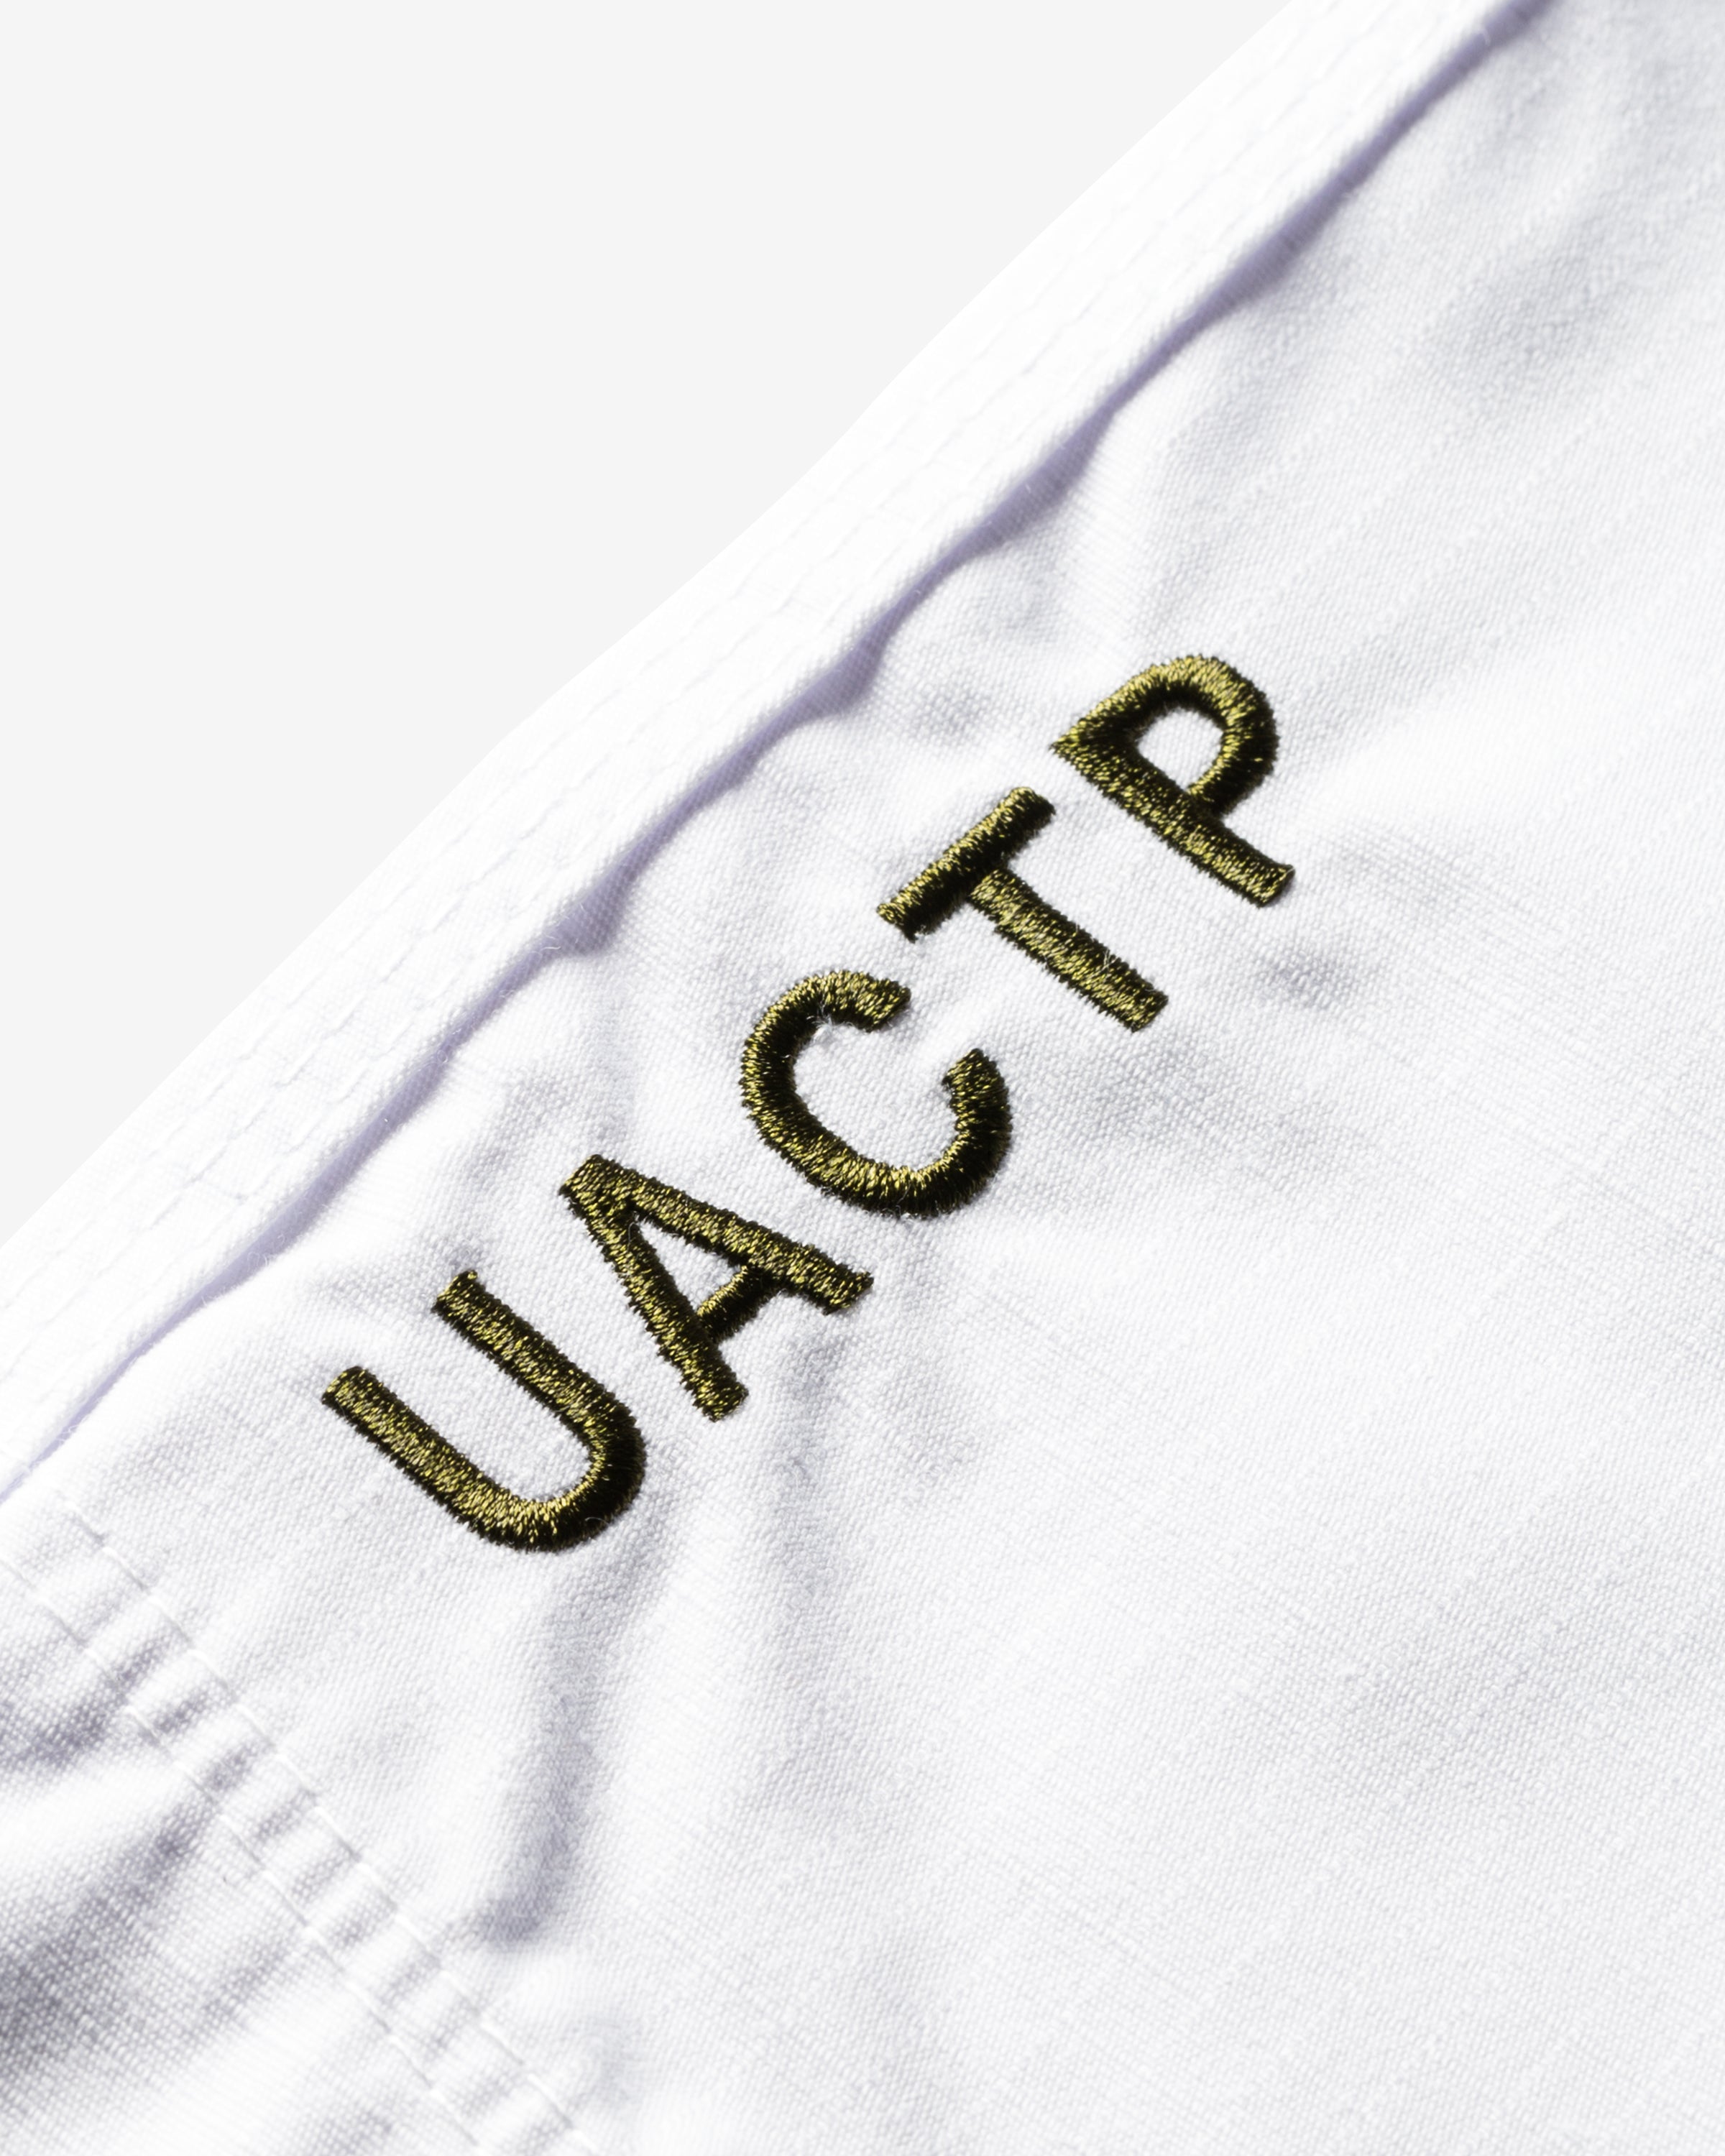 UACTP COMPETITION KIMONO - WHITE